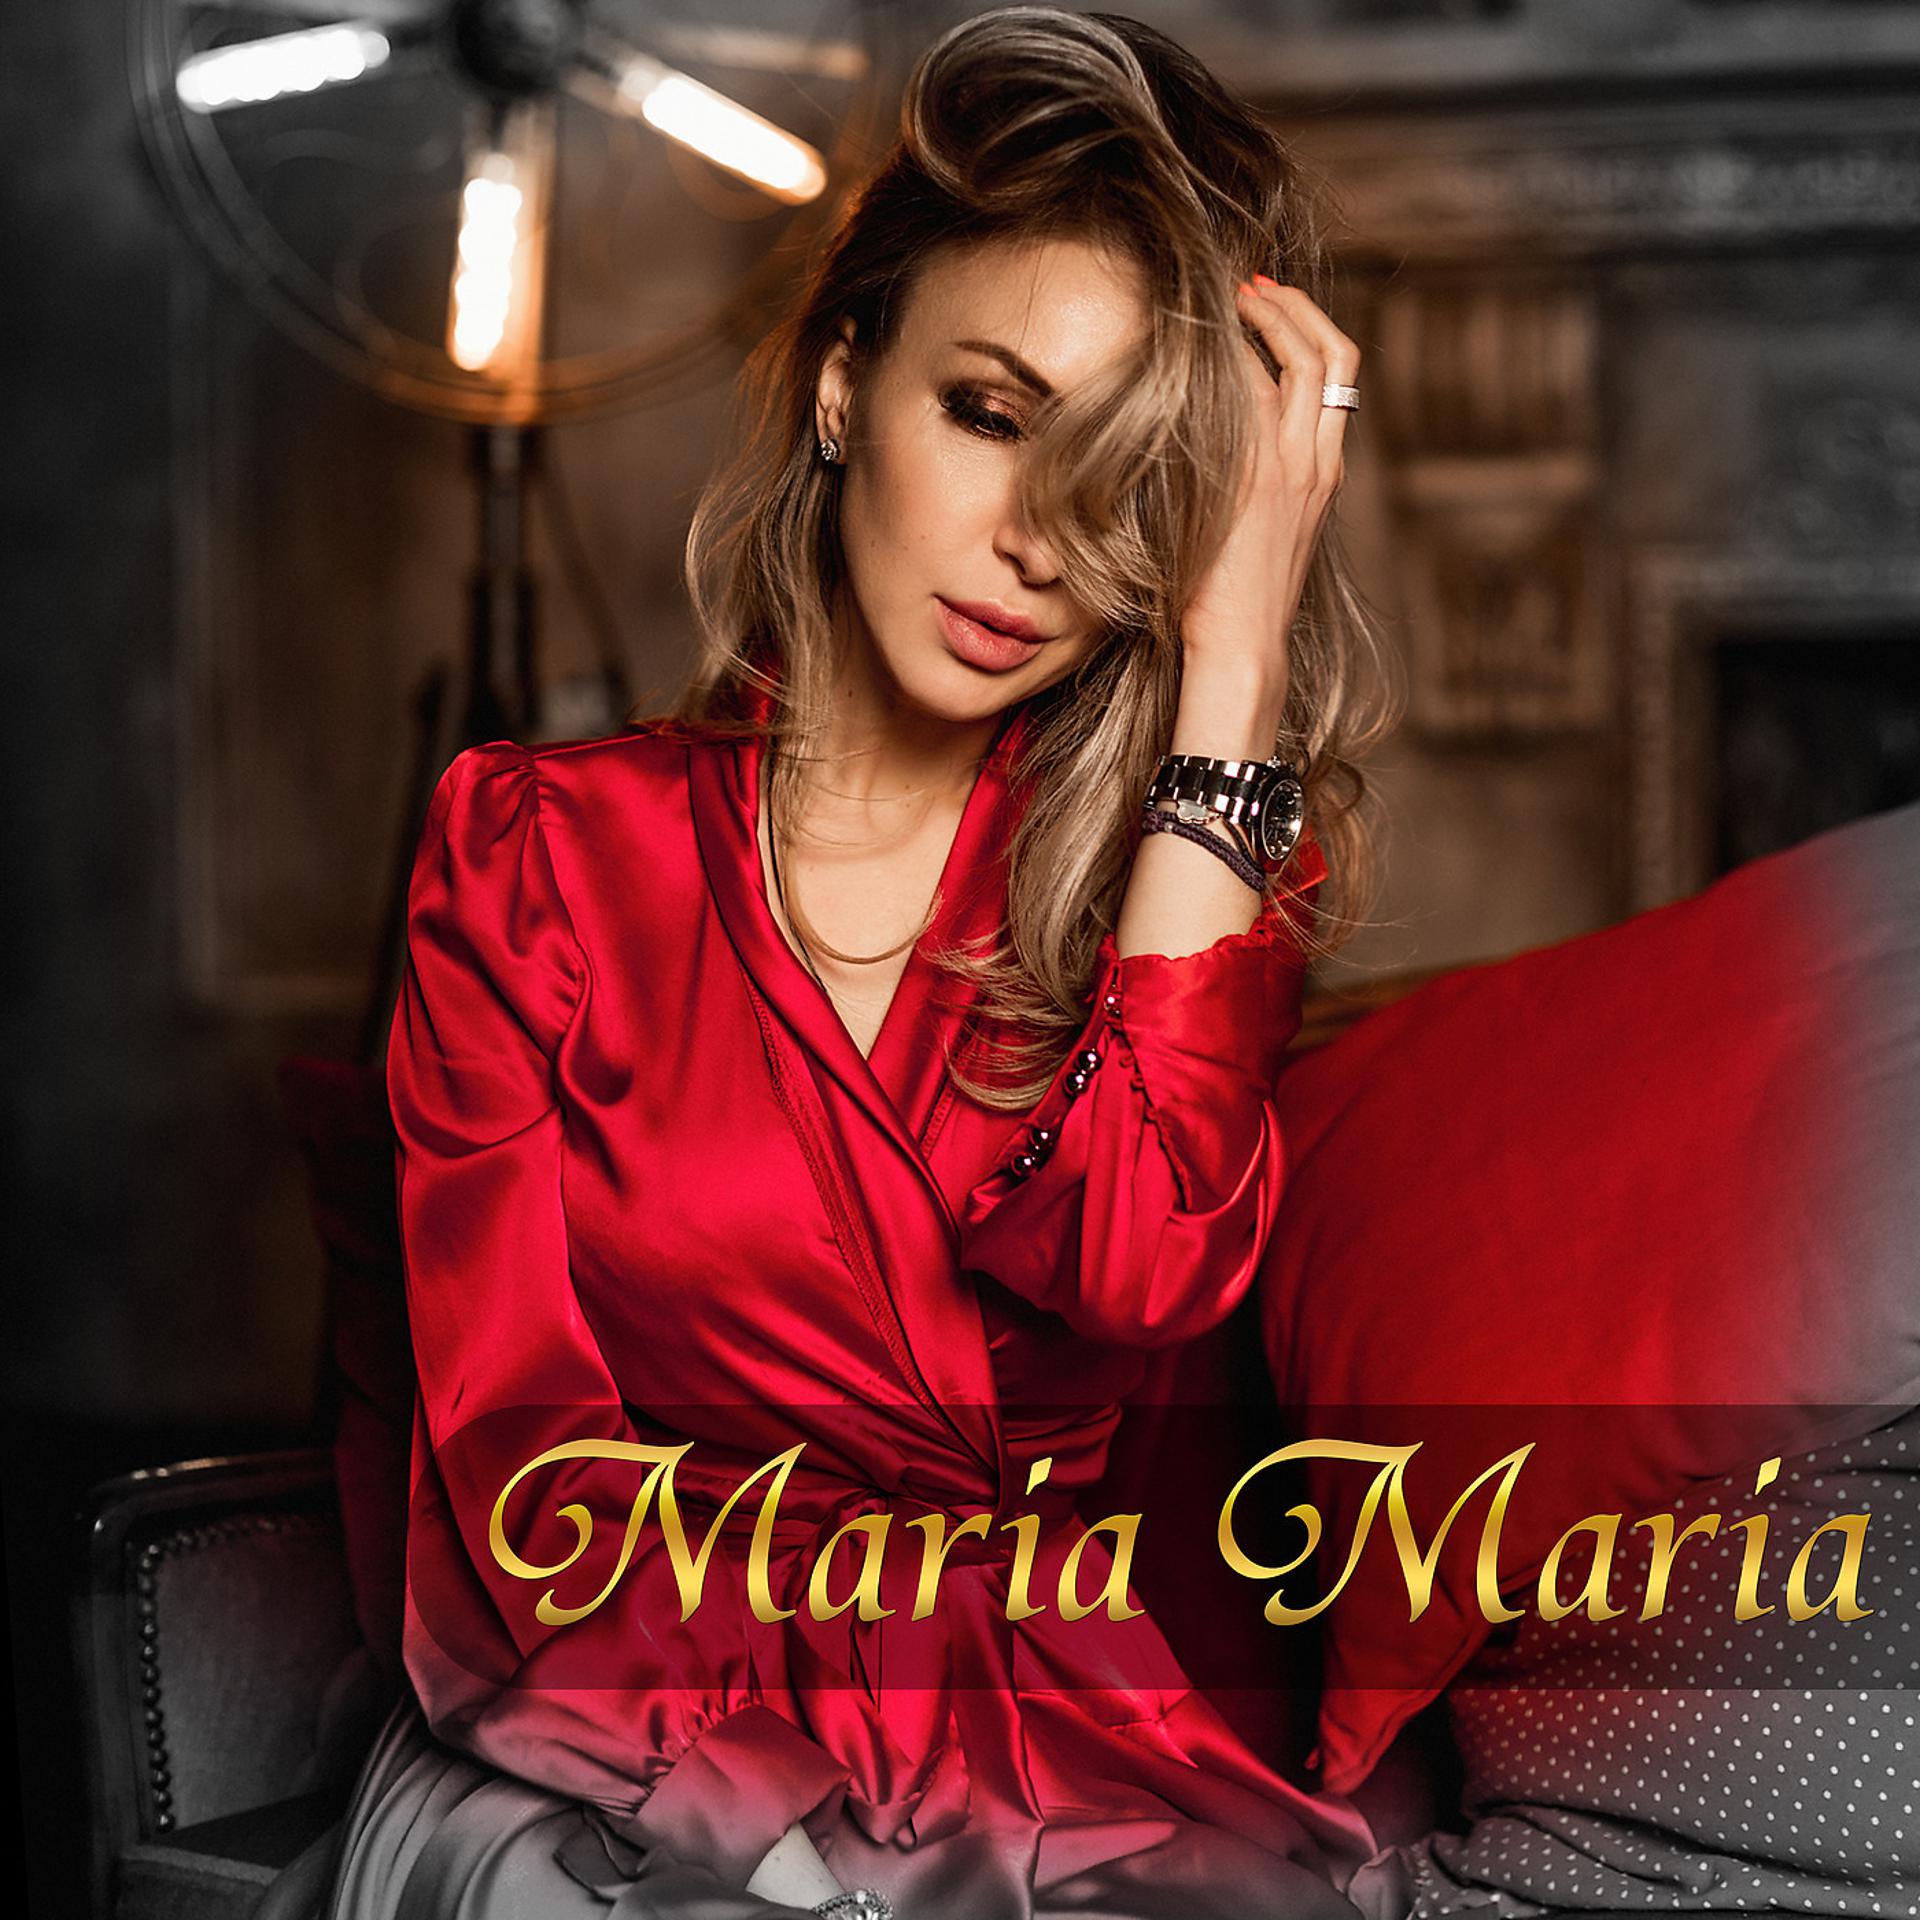 Maria music